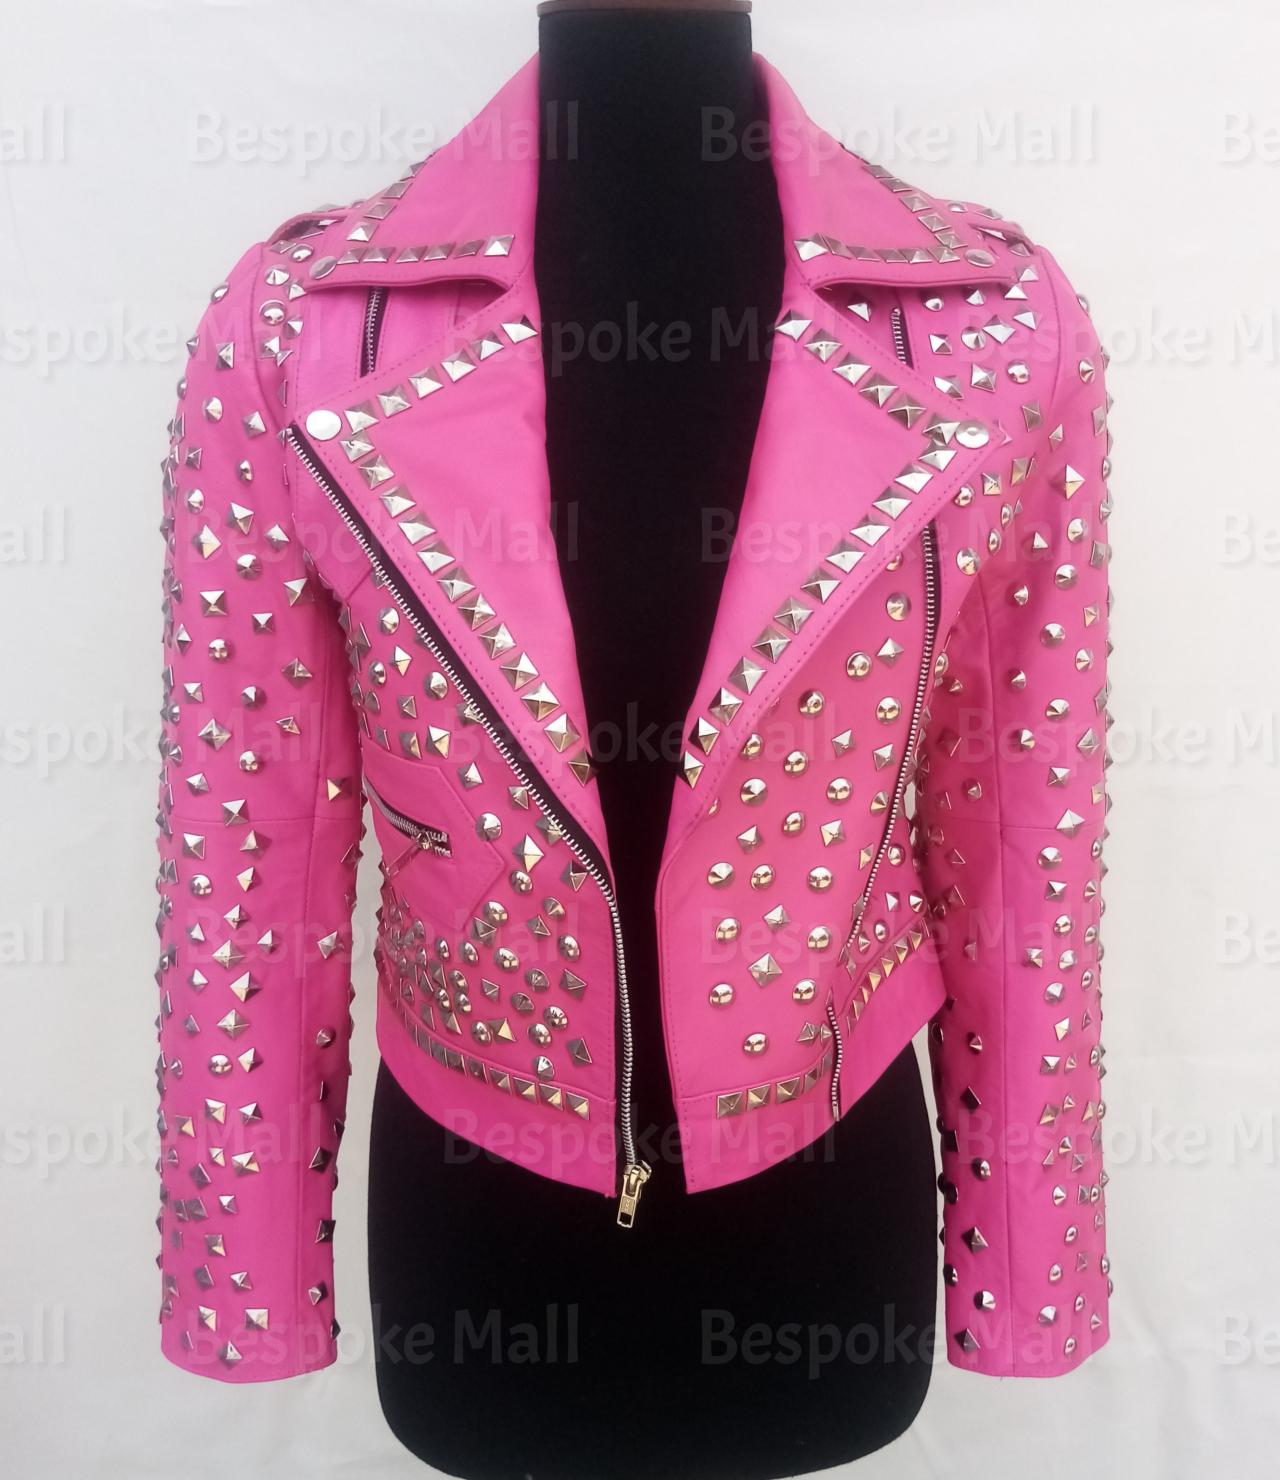 Handmade Women Pink Colored Short Body Full Silver Studded Stylish Design Cowhide Biker Leather Jacket-70